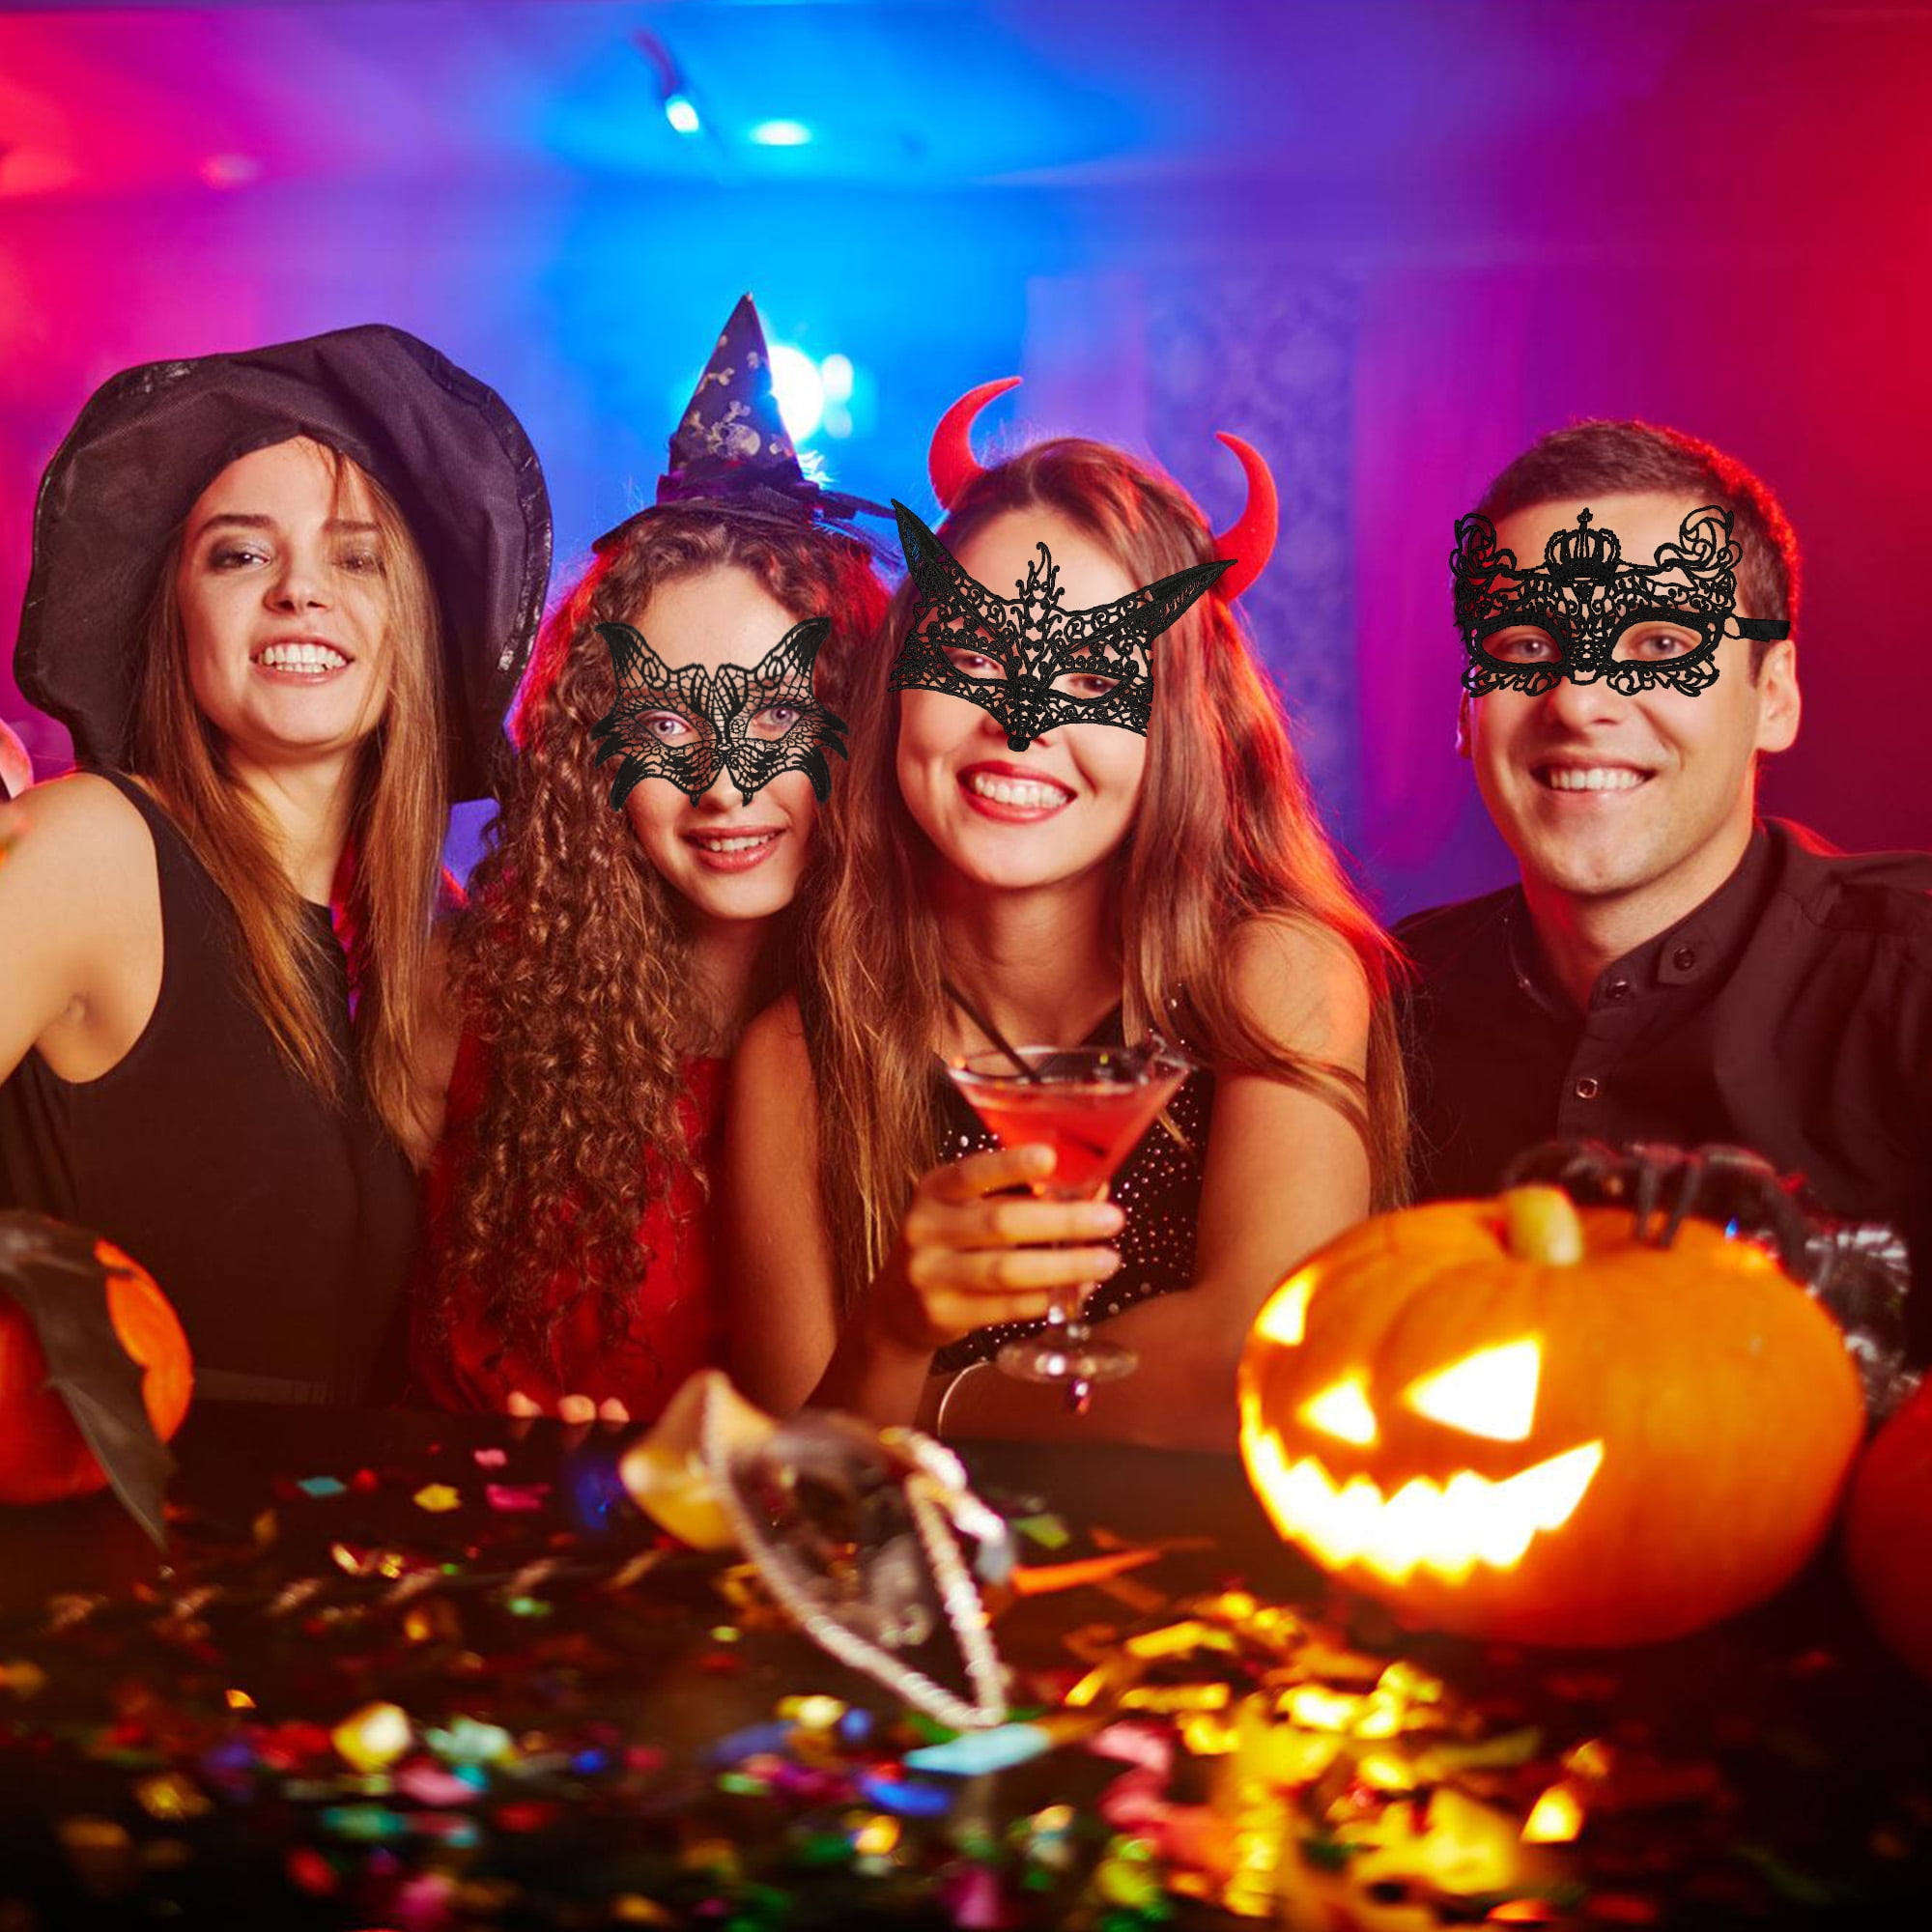 MFMYEE Lace Face Mask, Blackout Mesh Eye Mask Women's Sleeping Eye Mask for  Halloween Costume Party